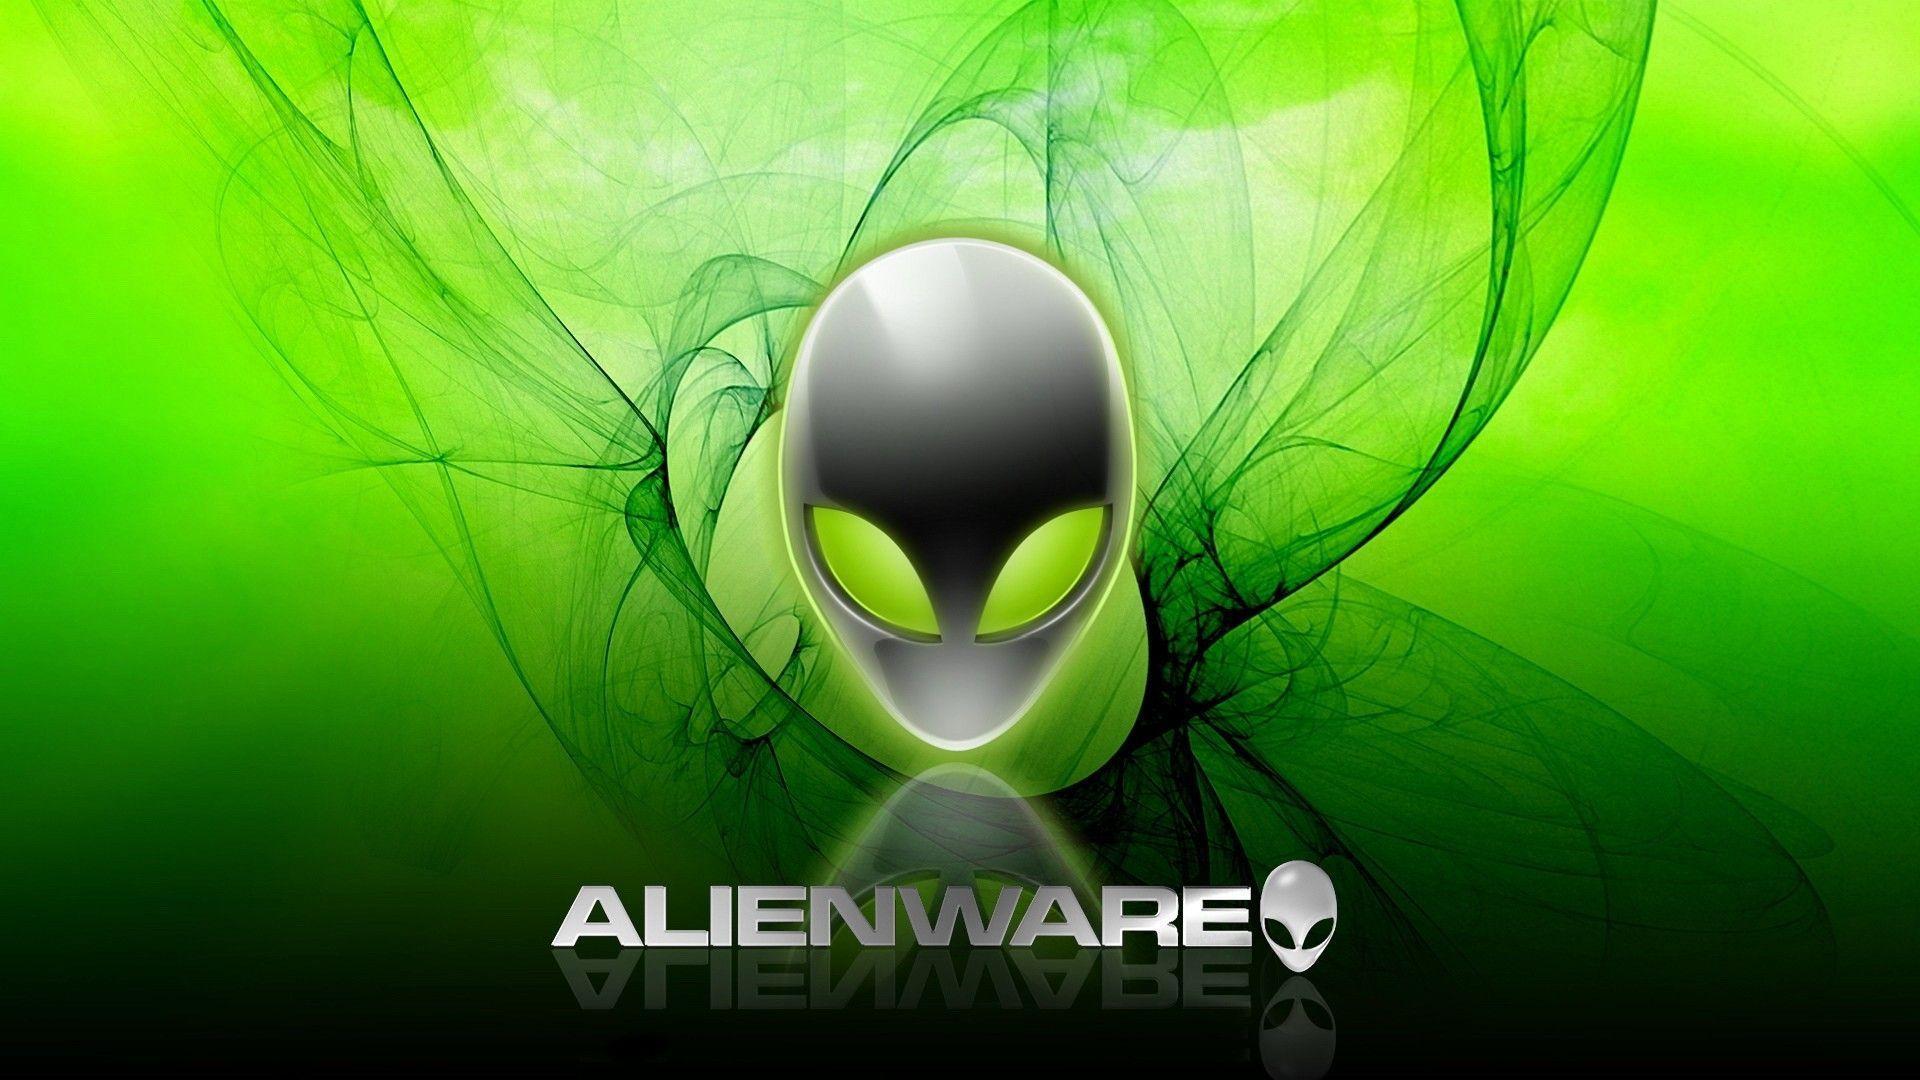 Green Alienware Wallpaper HD. TanukinoSippo